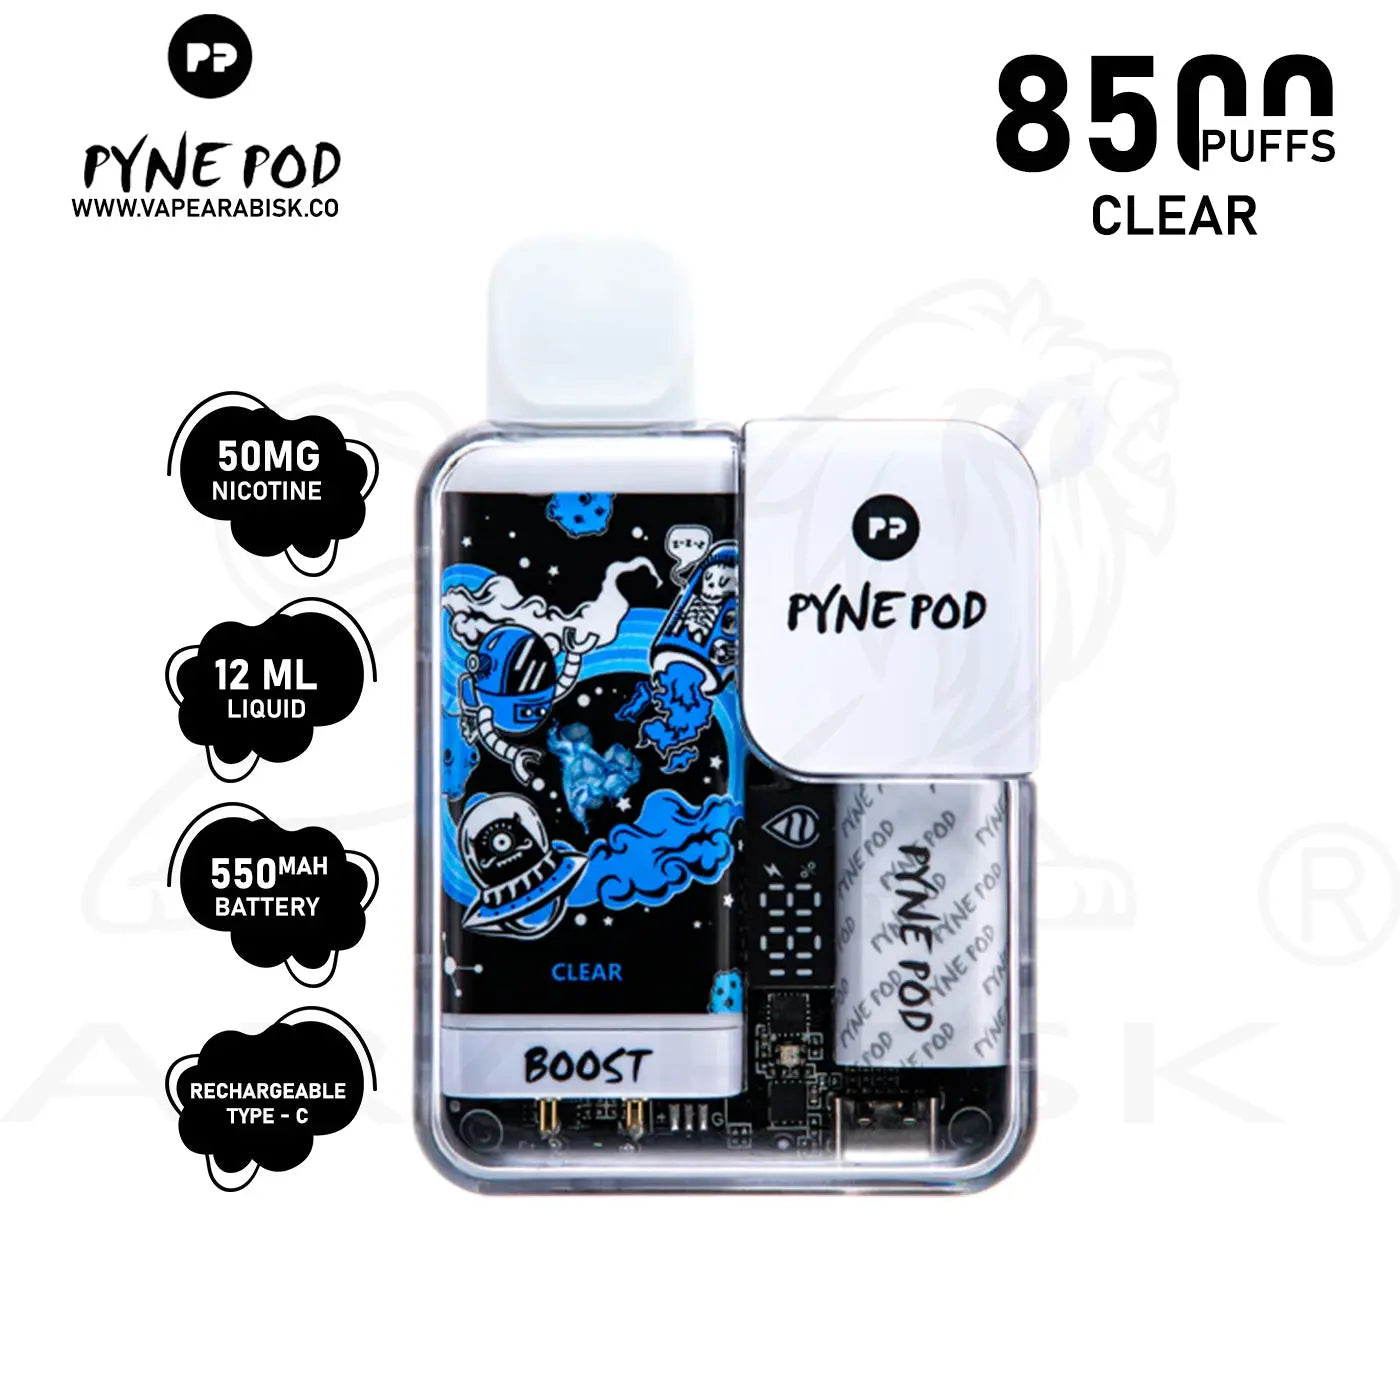 Pyne Pod Boost Disposable Vape - Blueberry Cotton Candy – Smoking